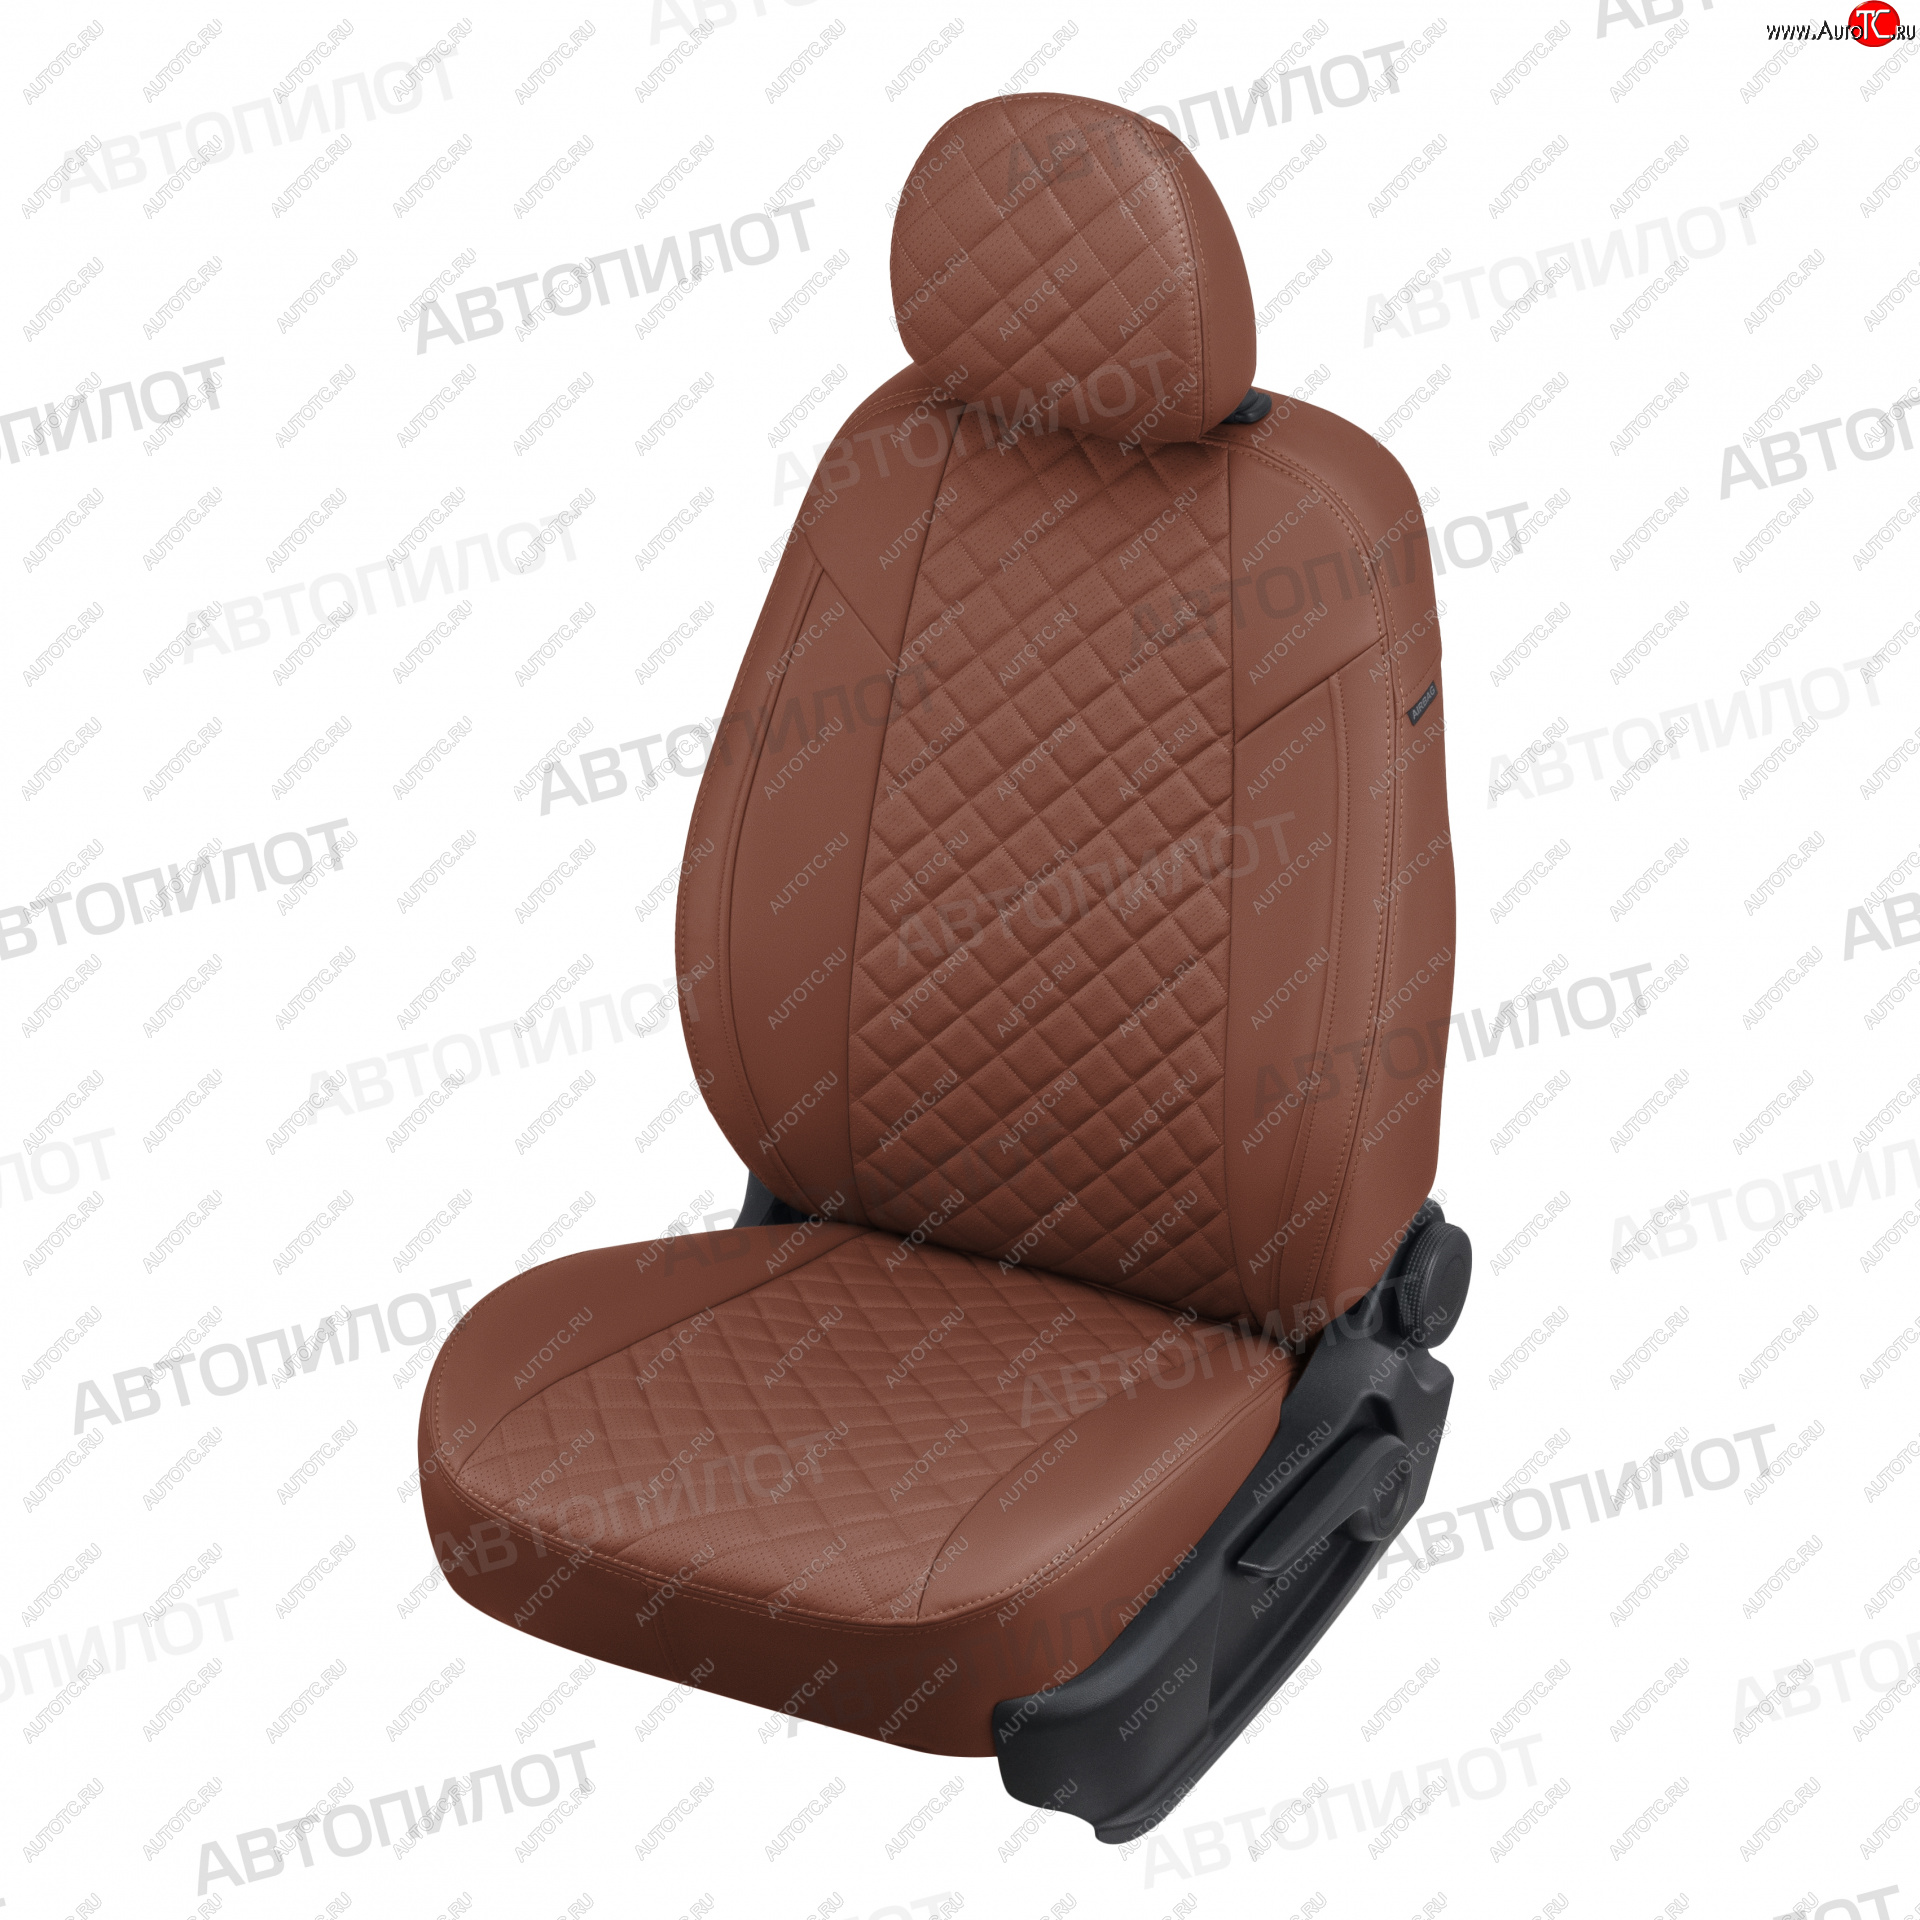 14 499 р. Чехлы сидений (5 мест, экокожа) Автопилот Ромб  Ford Galaxy  WGR (1995-2006) (коричневый)